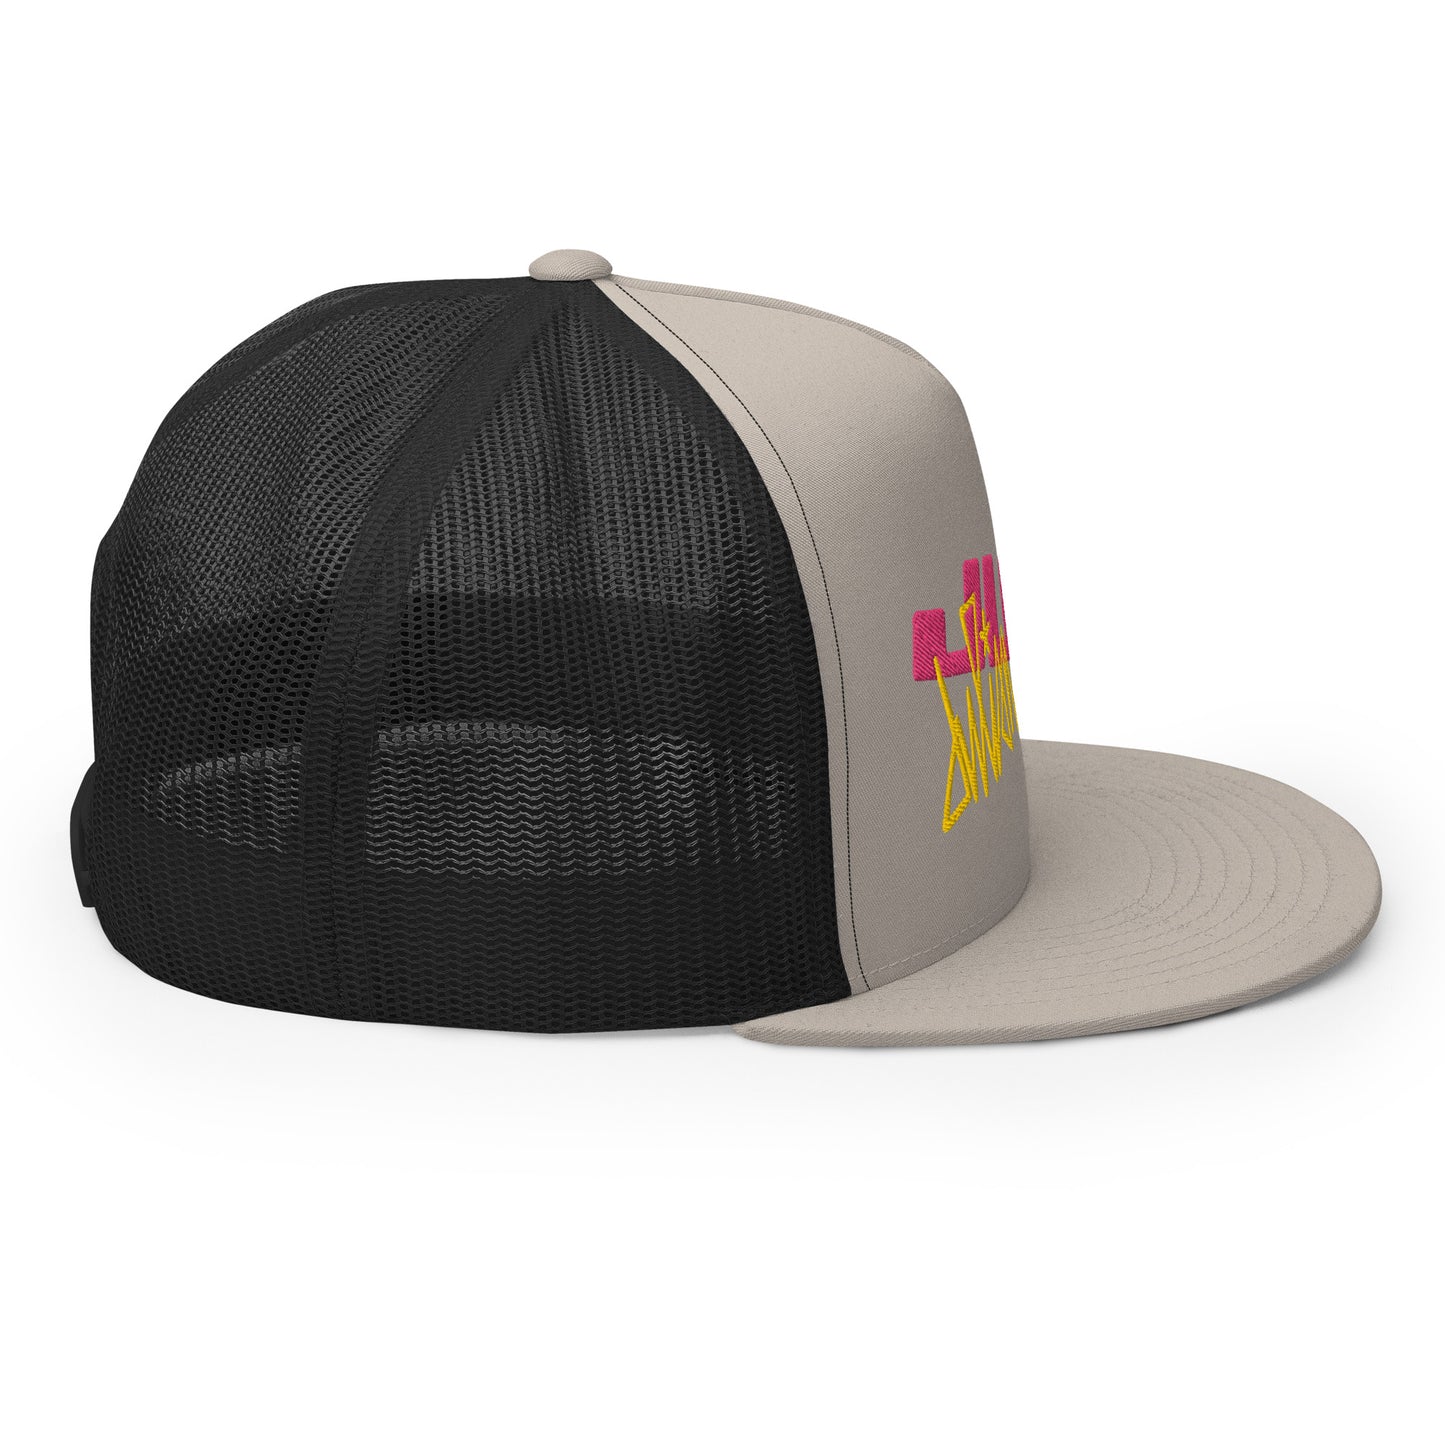 Juki Killer Bee Trucker Hat (CMYK)